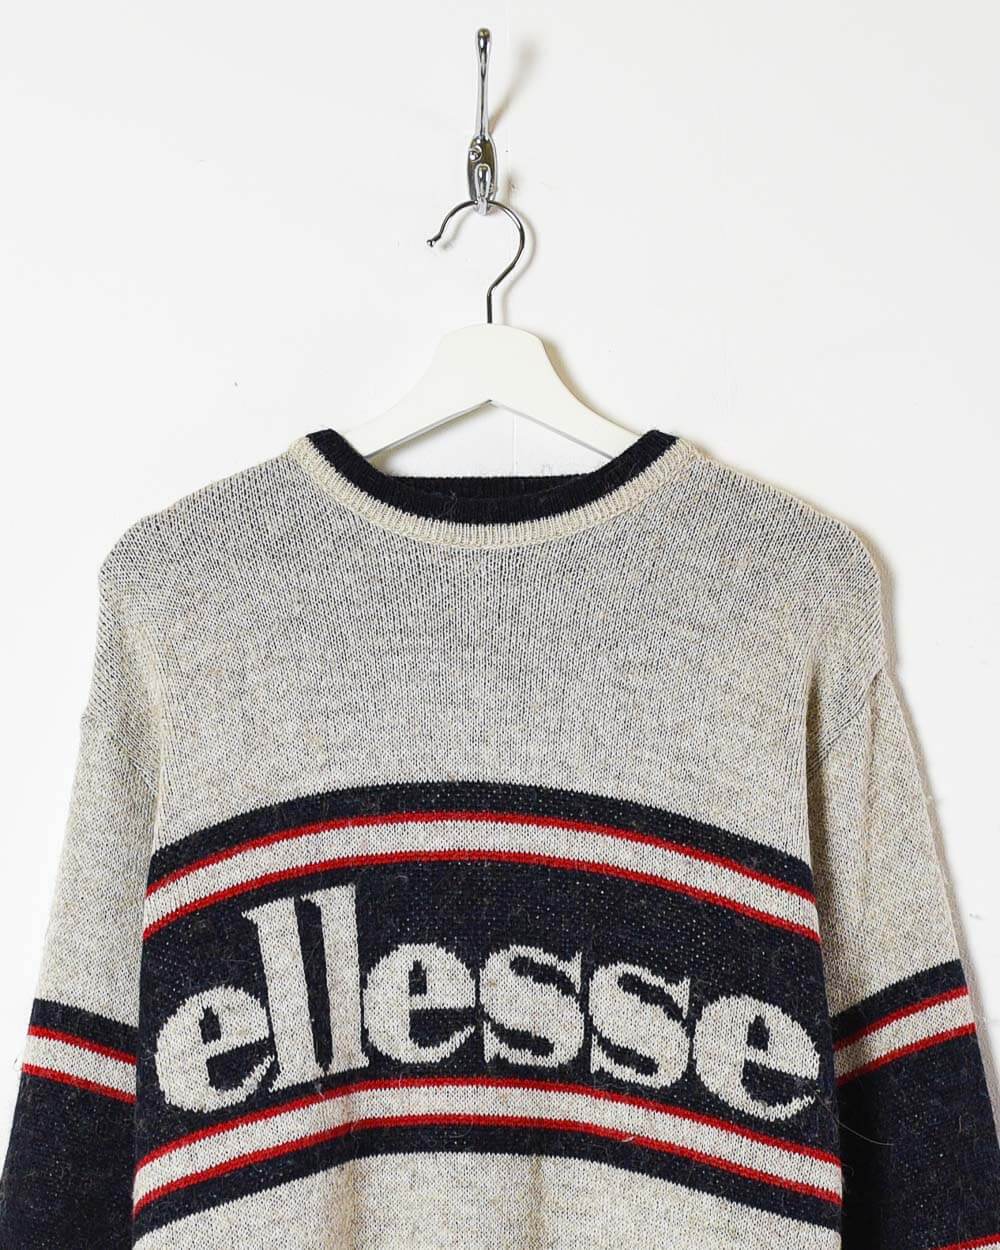 Stone Ellesse Knitted Sweatshirt - Medium